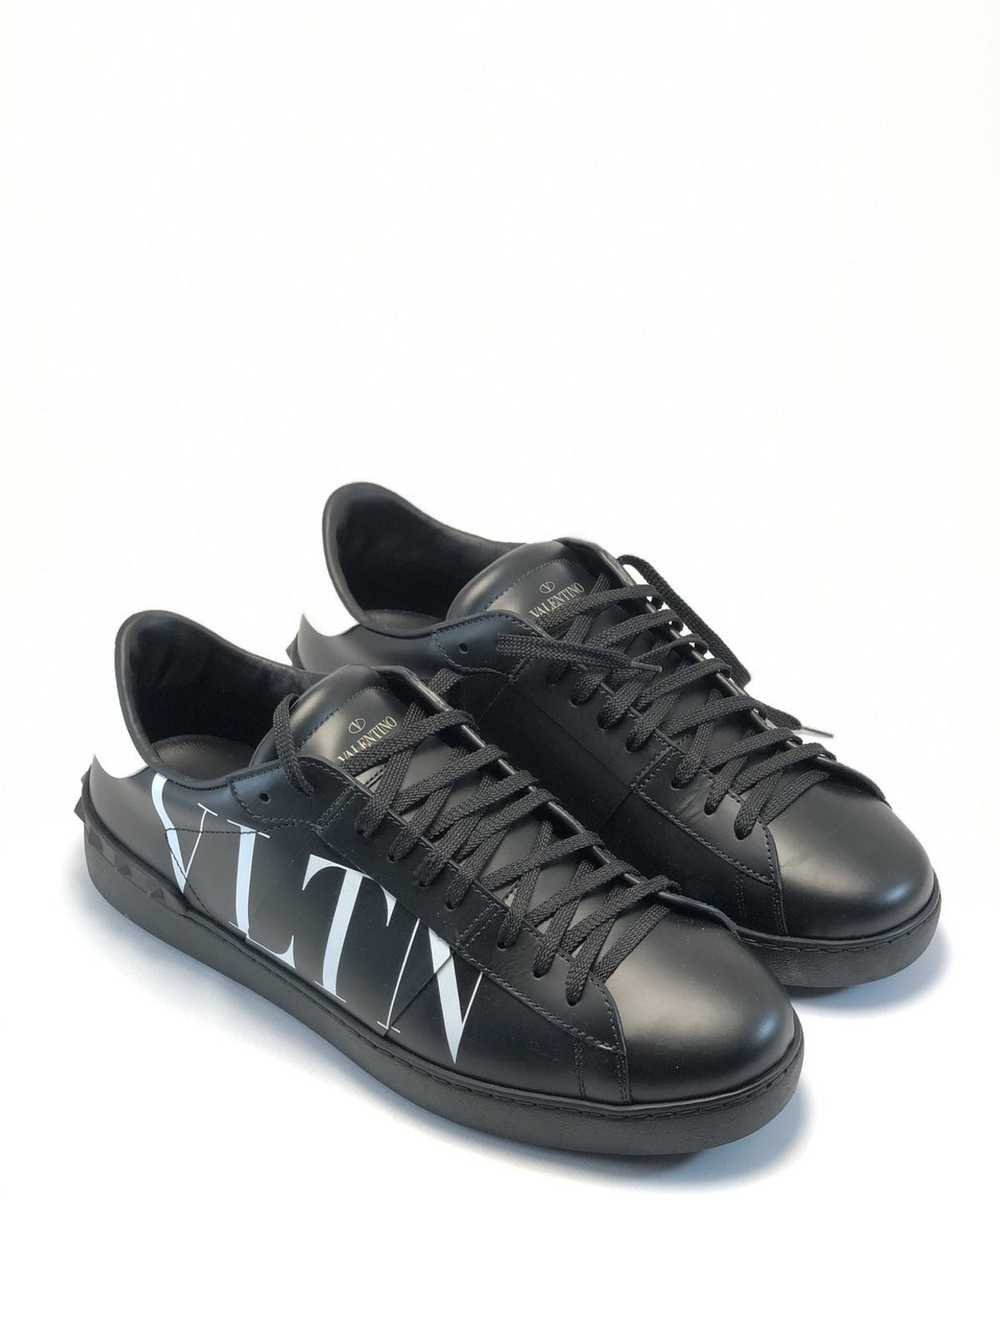 Valentino Valentino garavani sneakers - image 1